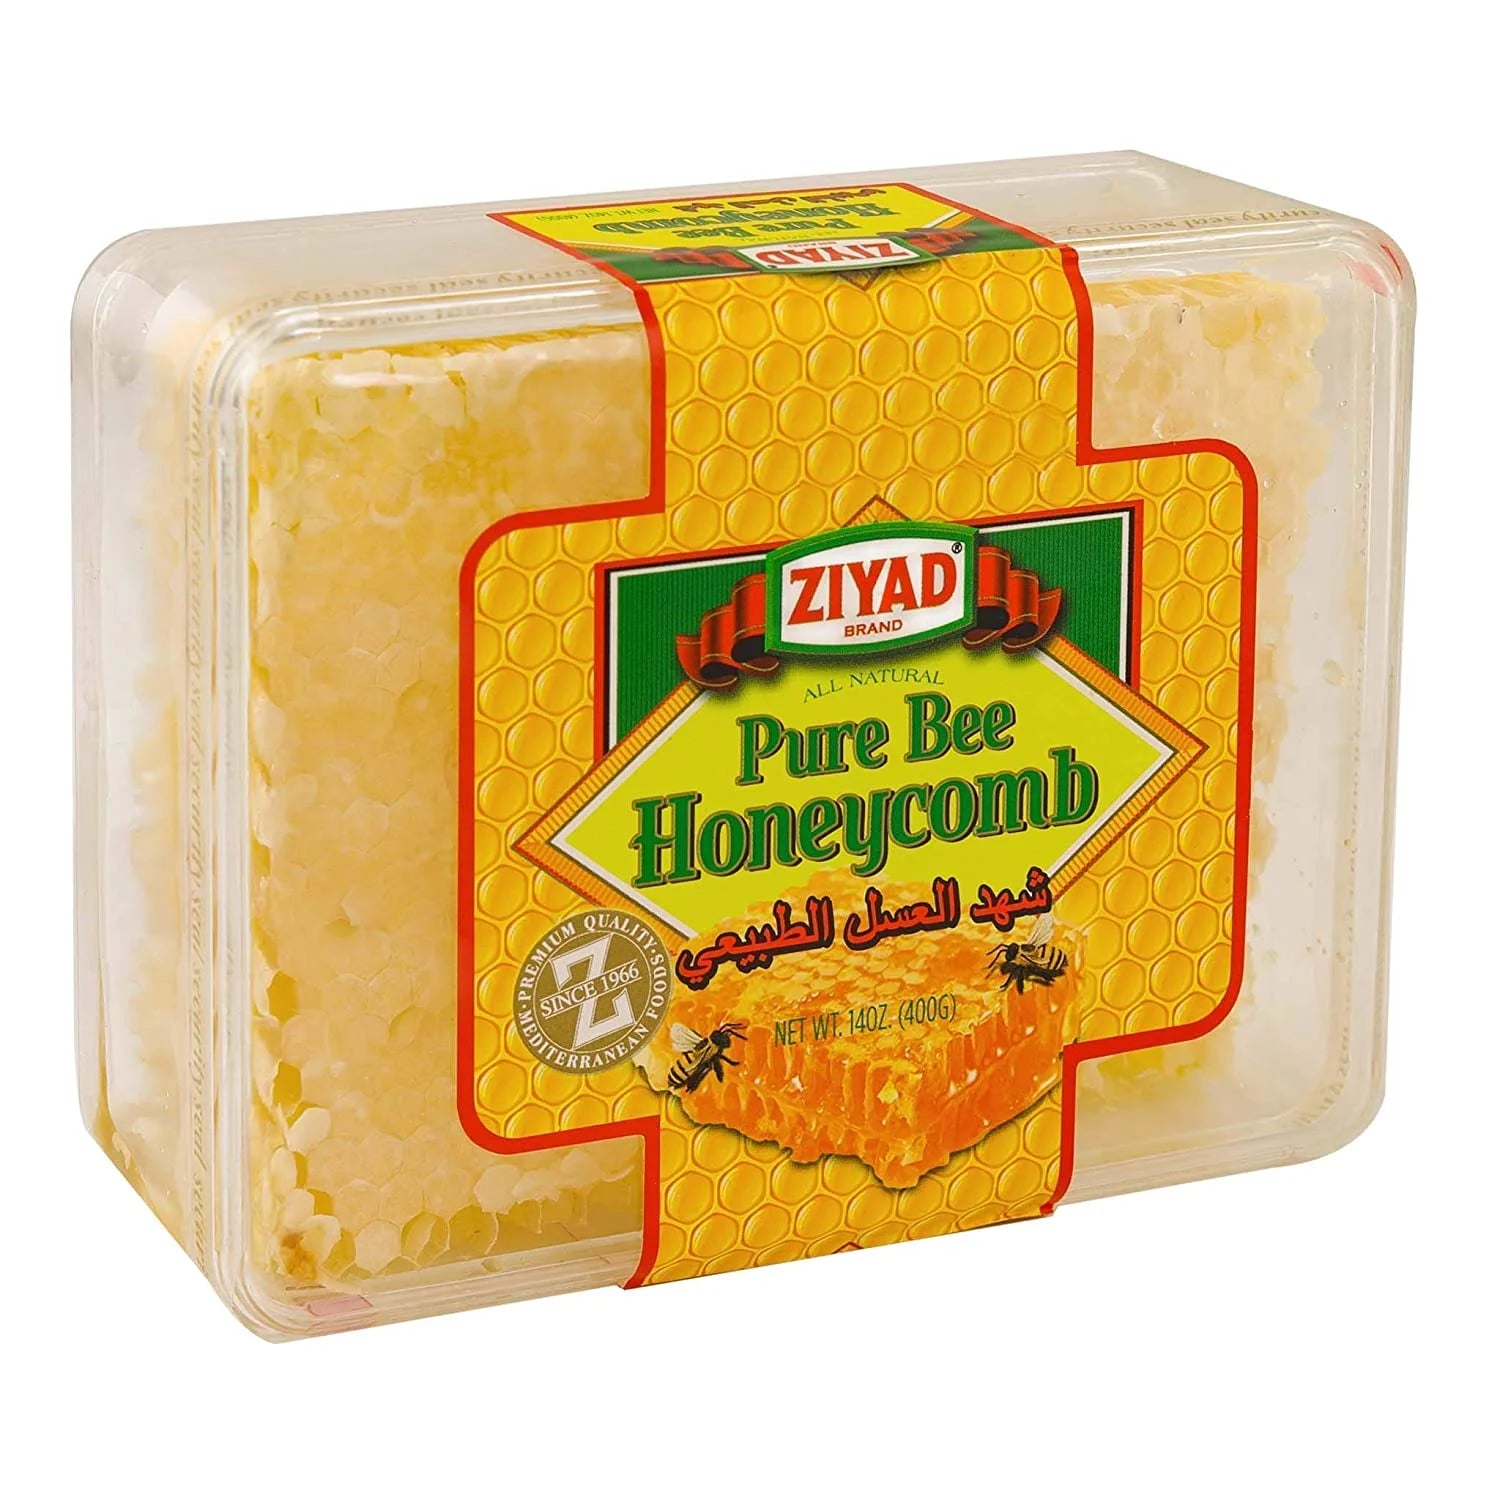 ziyad-honey-comb12-8-oz-365g-plastic-container